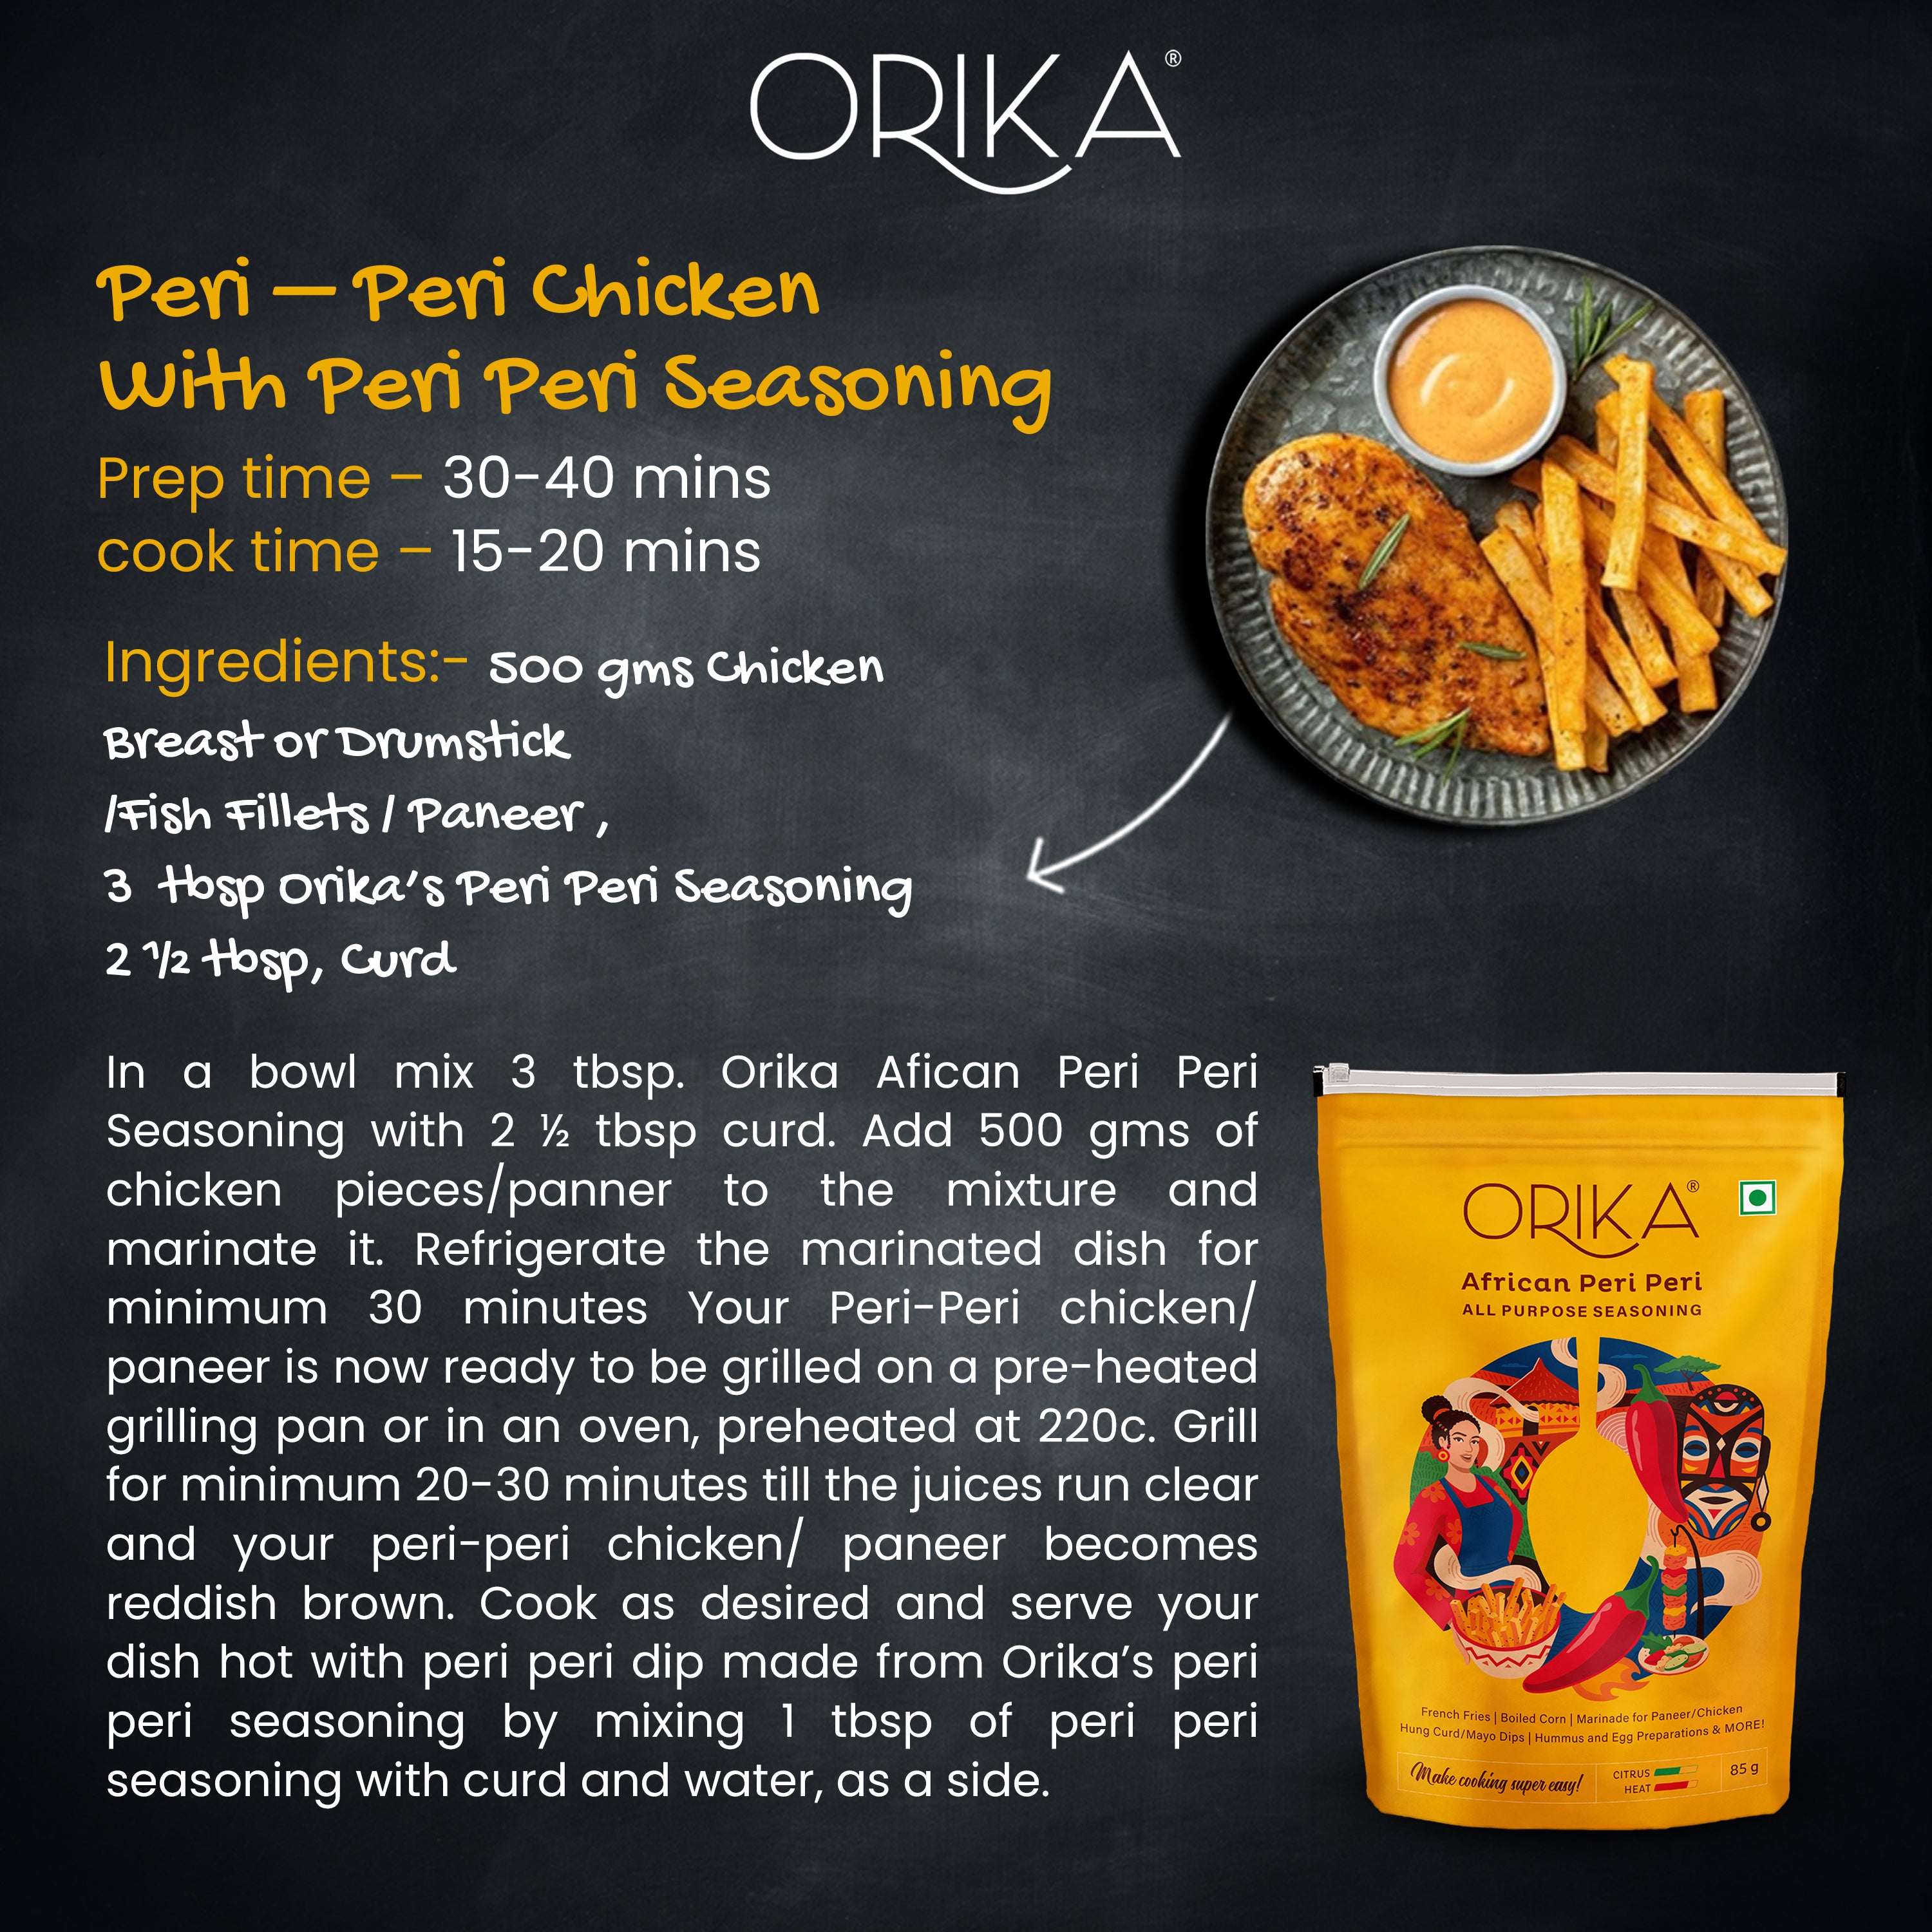 Orika African Peri Peri All Purpose Seasoning, 85g - Orika Spices India